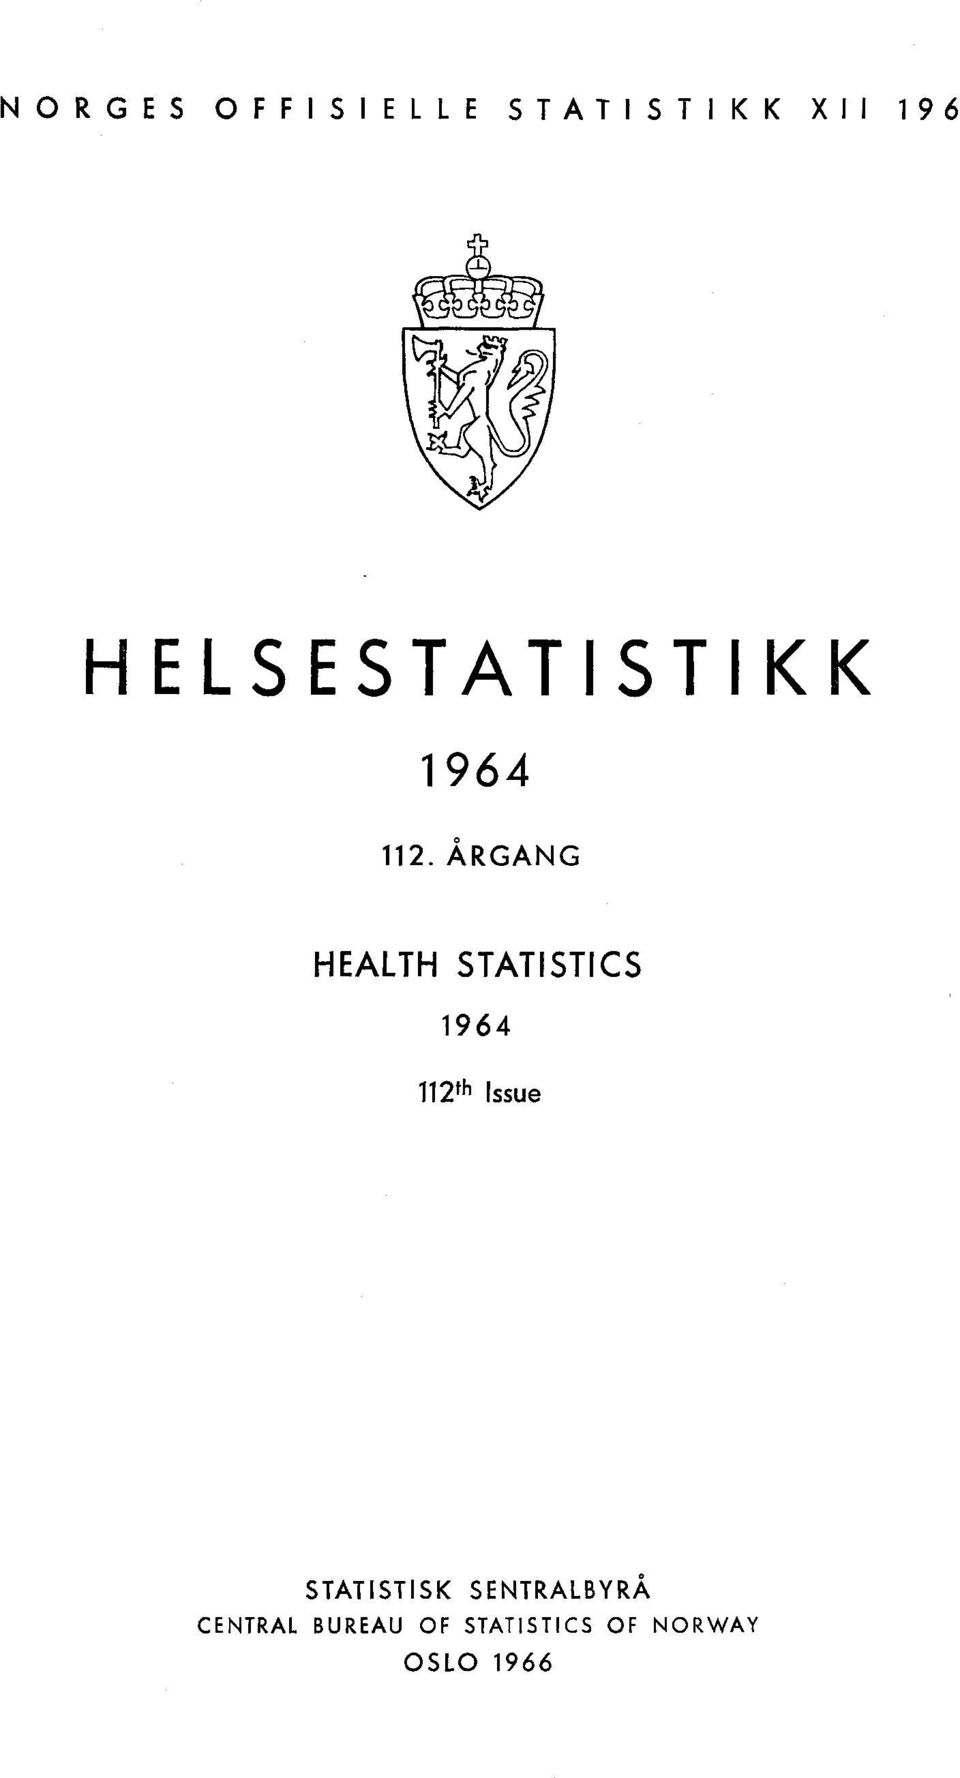 ÅRGANG HEALTH STATISTICS 1964 112th Issue